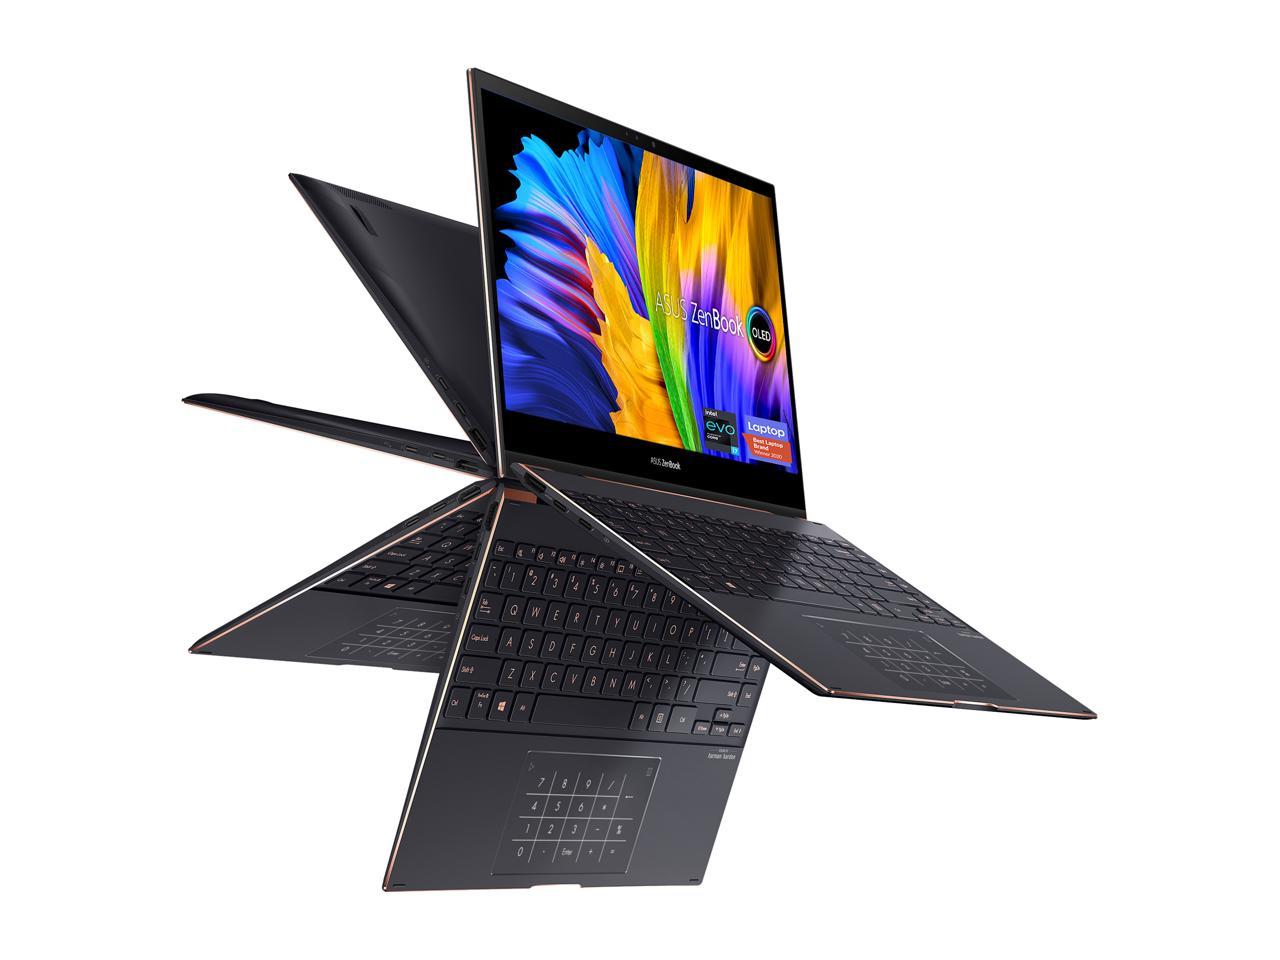 ASUS ZenBook Flip S13 OLED Ultra Slim Laptop, 13.3" 4K Touch, Intel Evo Platform Core i7-1165G7 CPU, 16GB RAM, 1TB SSD, Thunderbolt4, TPM, Win10 Pro, AI Noise-cancellation, Jade Black, UX371EA-XB76T